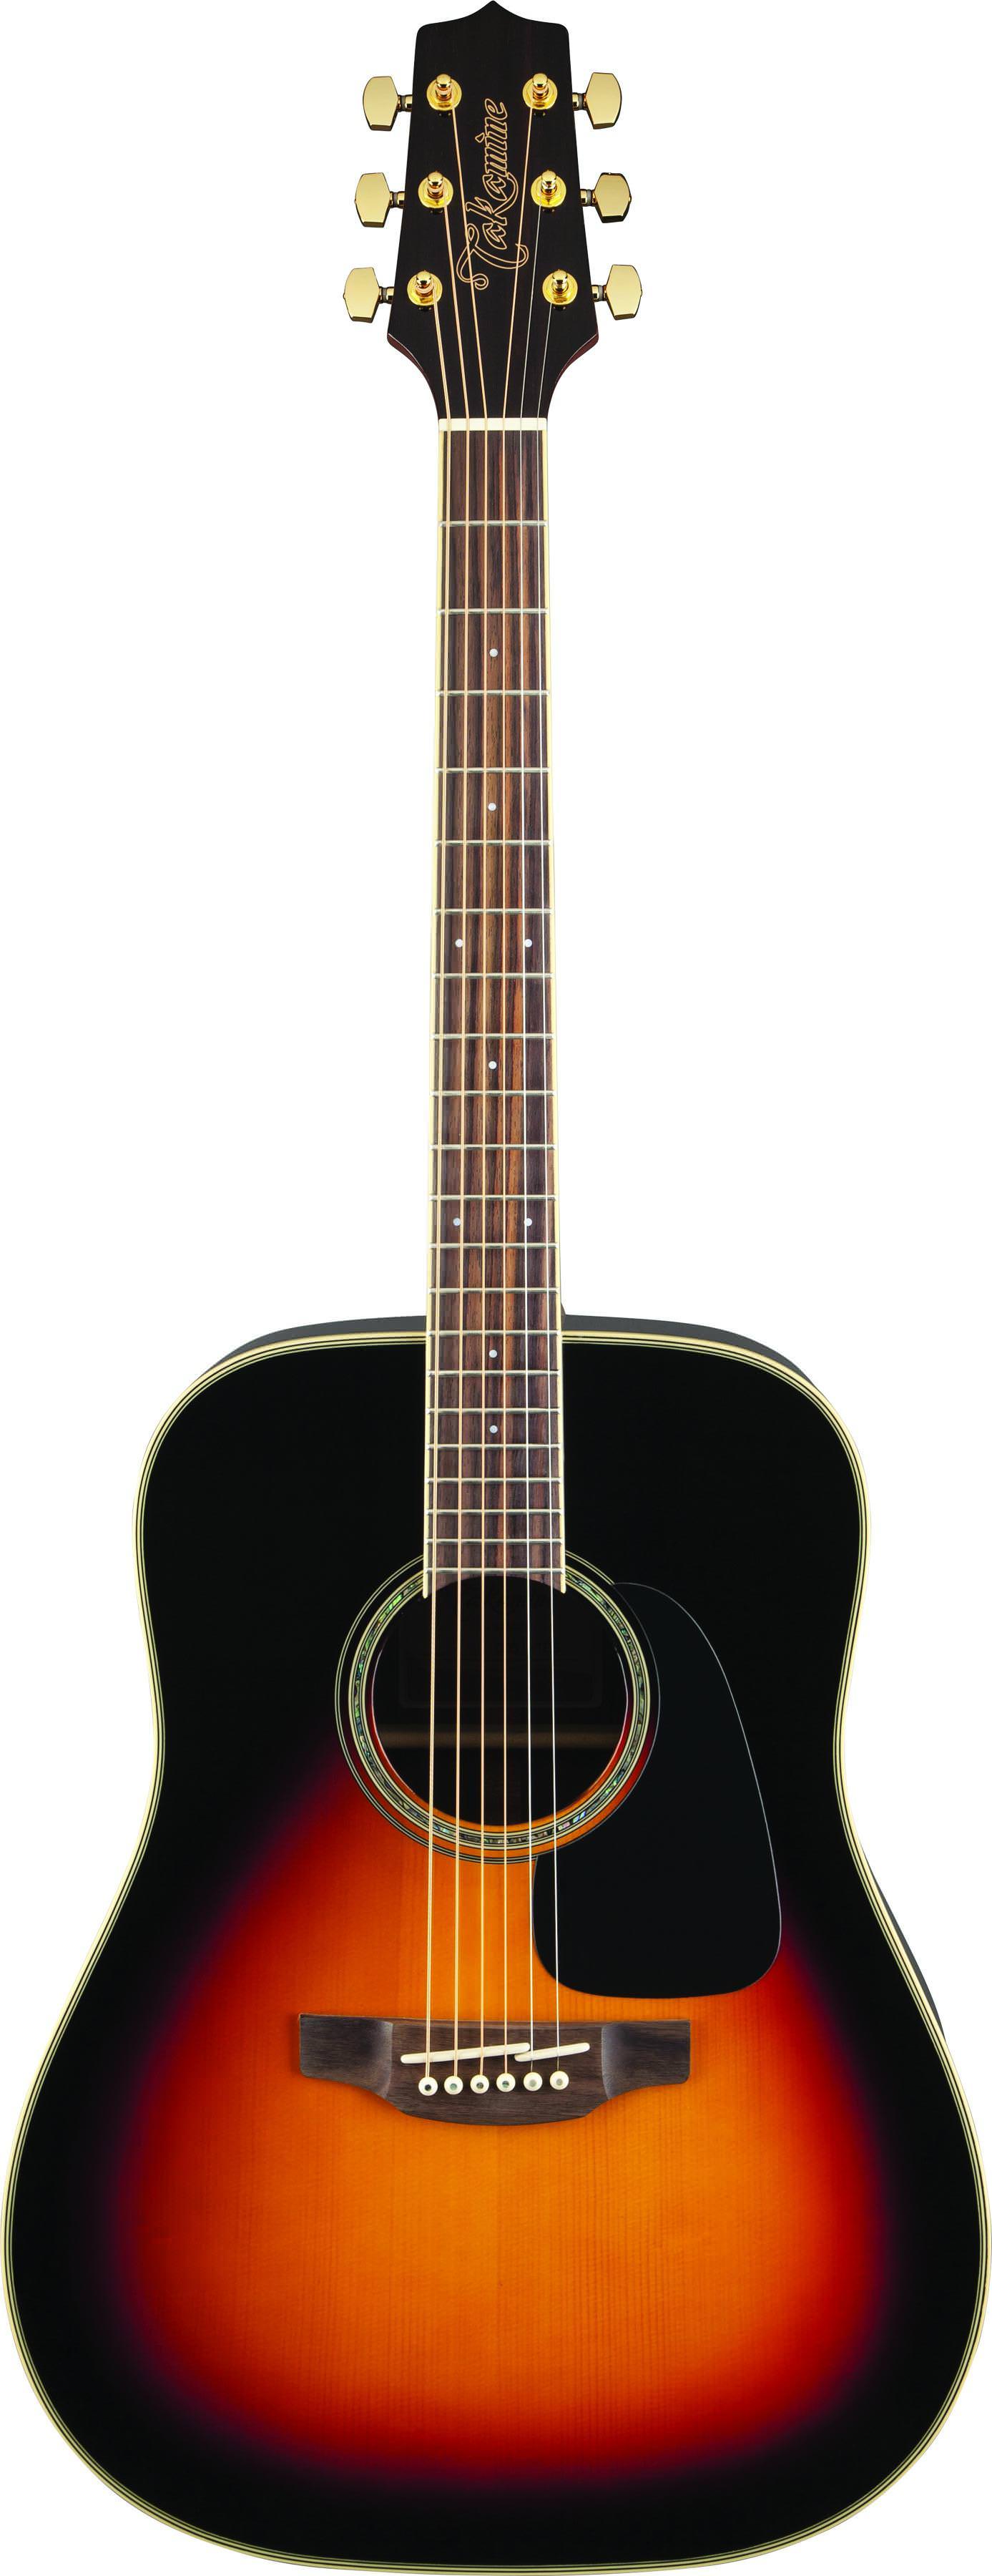 TAKAMINE G50 SERIES GD51-BSB акустическая гитара типа DREADNOUGHT цвет санберст.